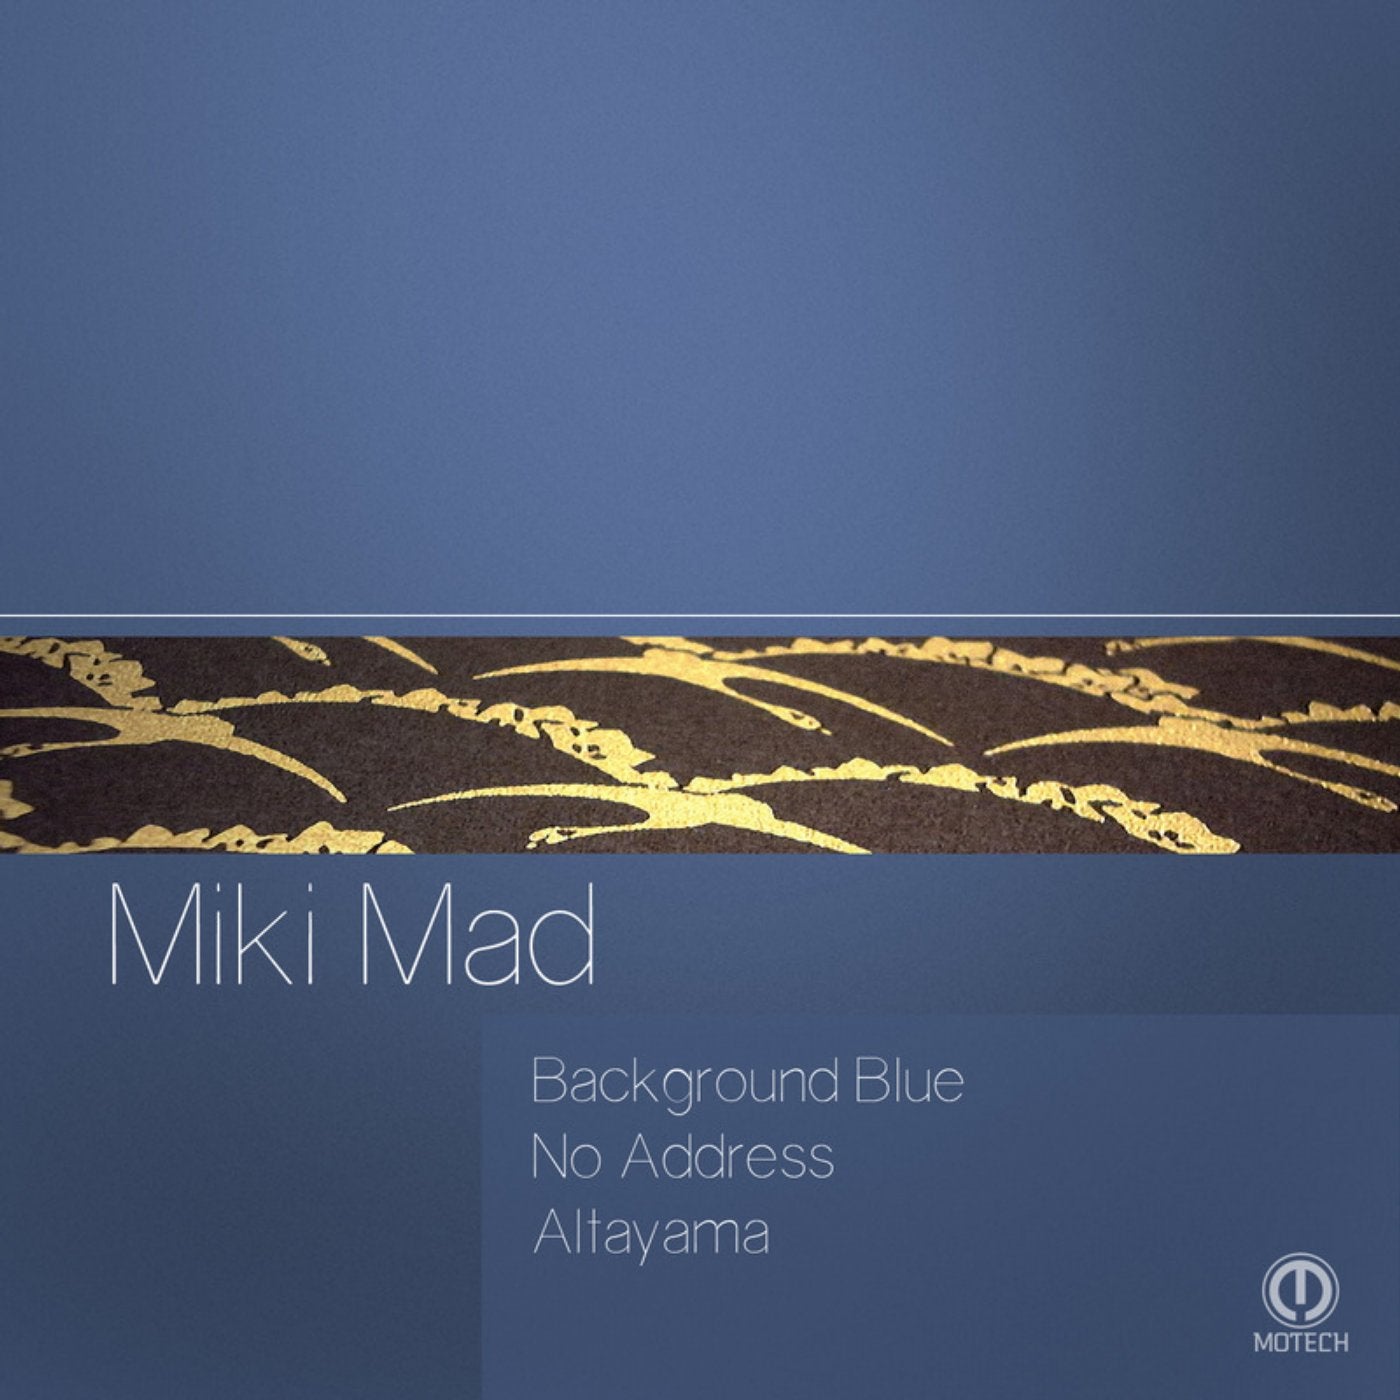 Background Blue EP